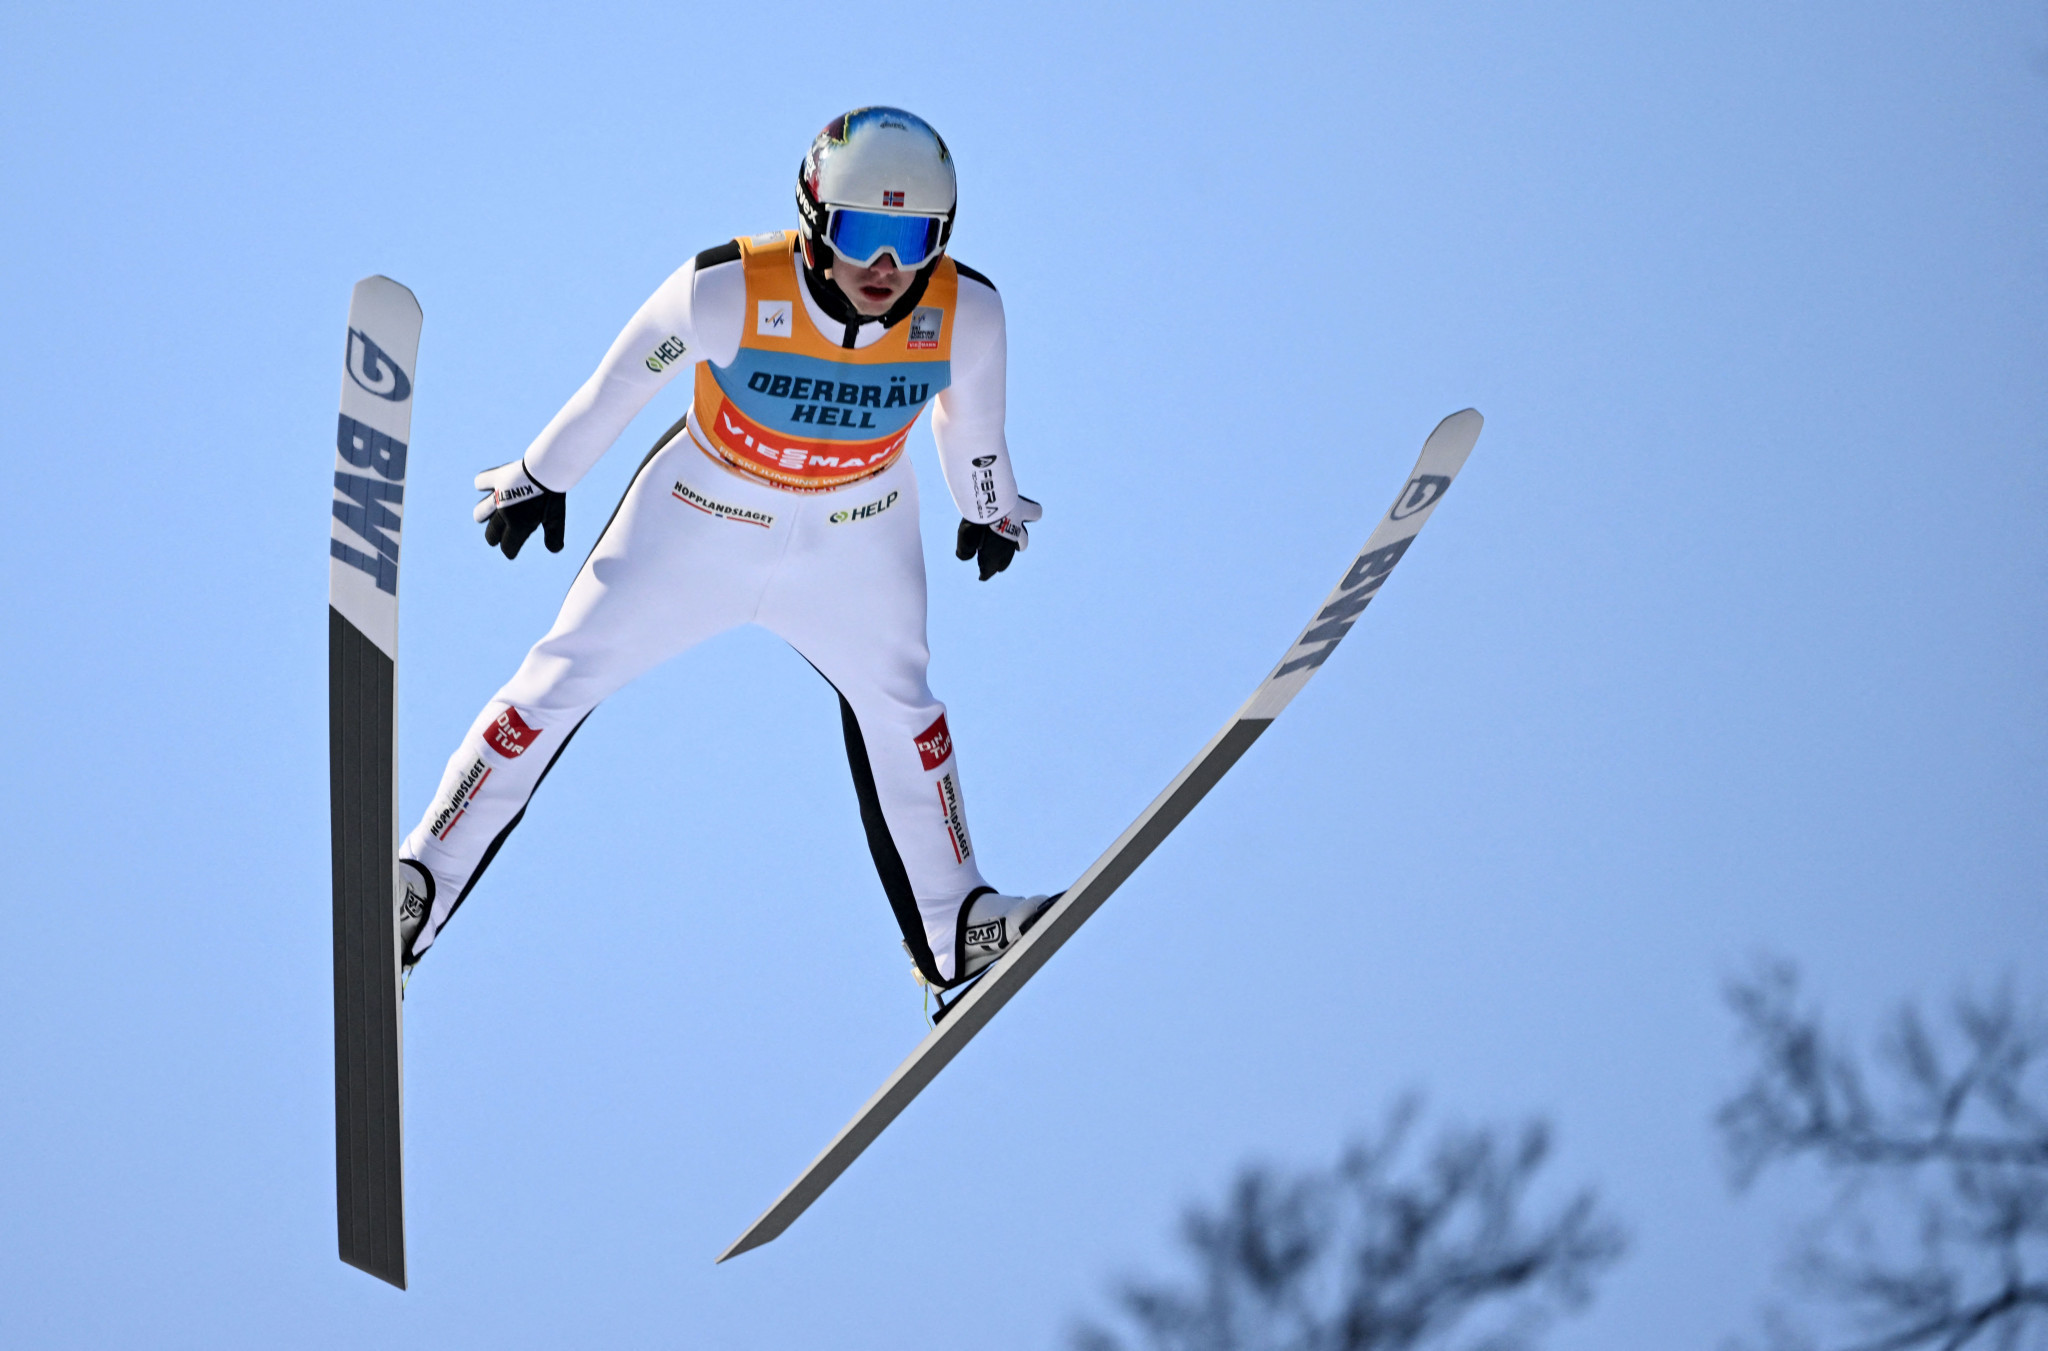 Norway's Halvor Egner Granerud extended his men's Ski Jumping World Cup lead in Willingen ©Getty Images